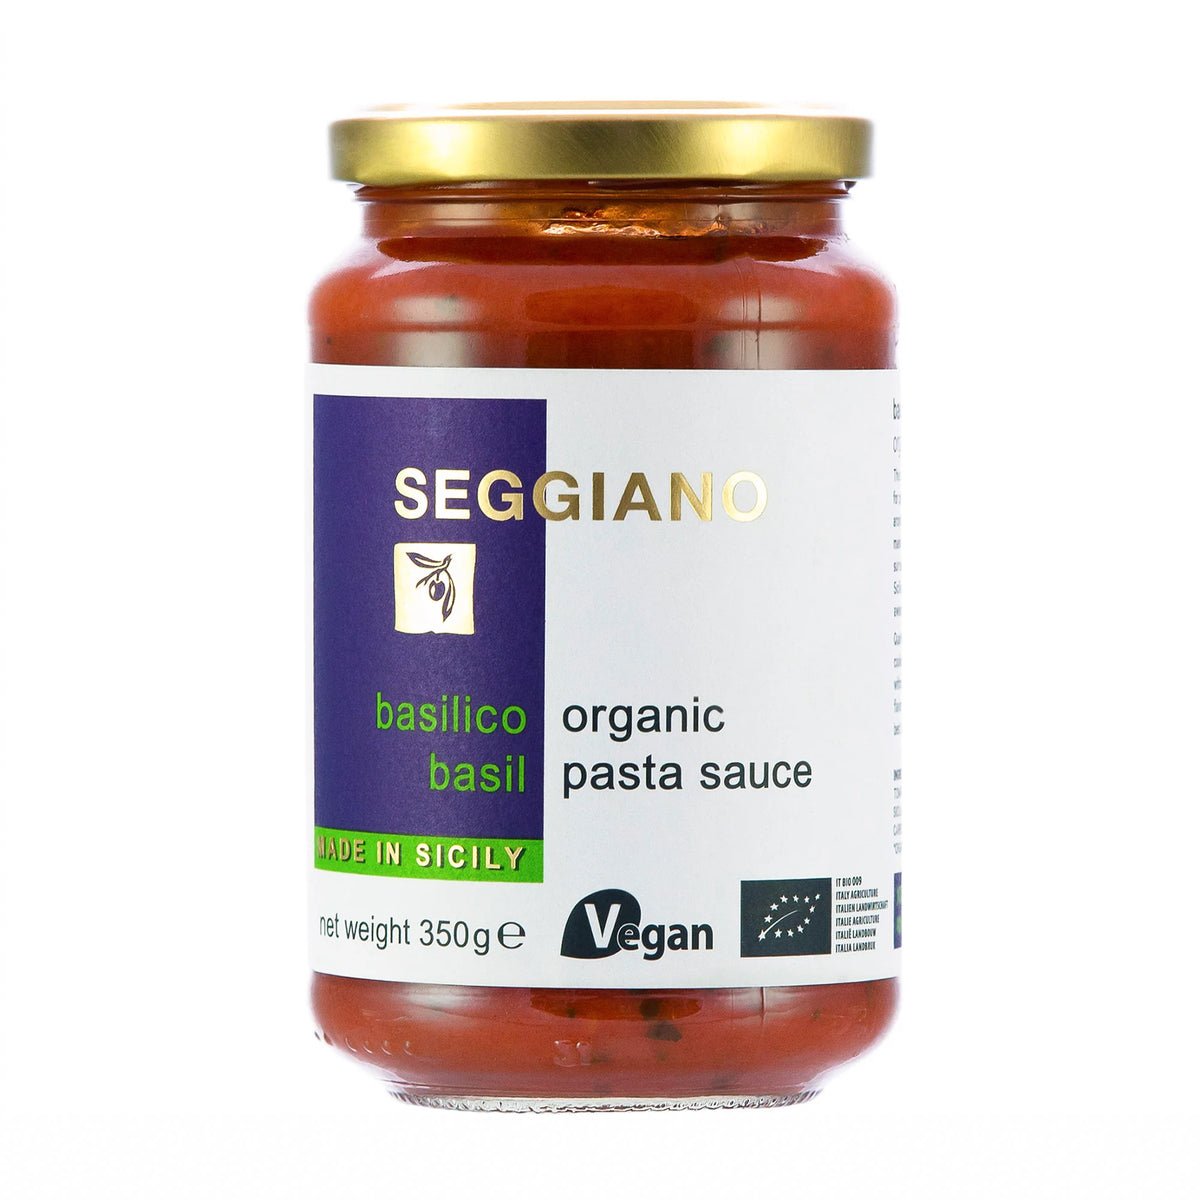 Seggiano Organic Basilico Basil Pasta Sauce | 350g